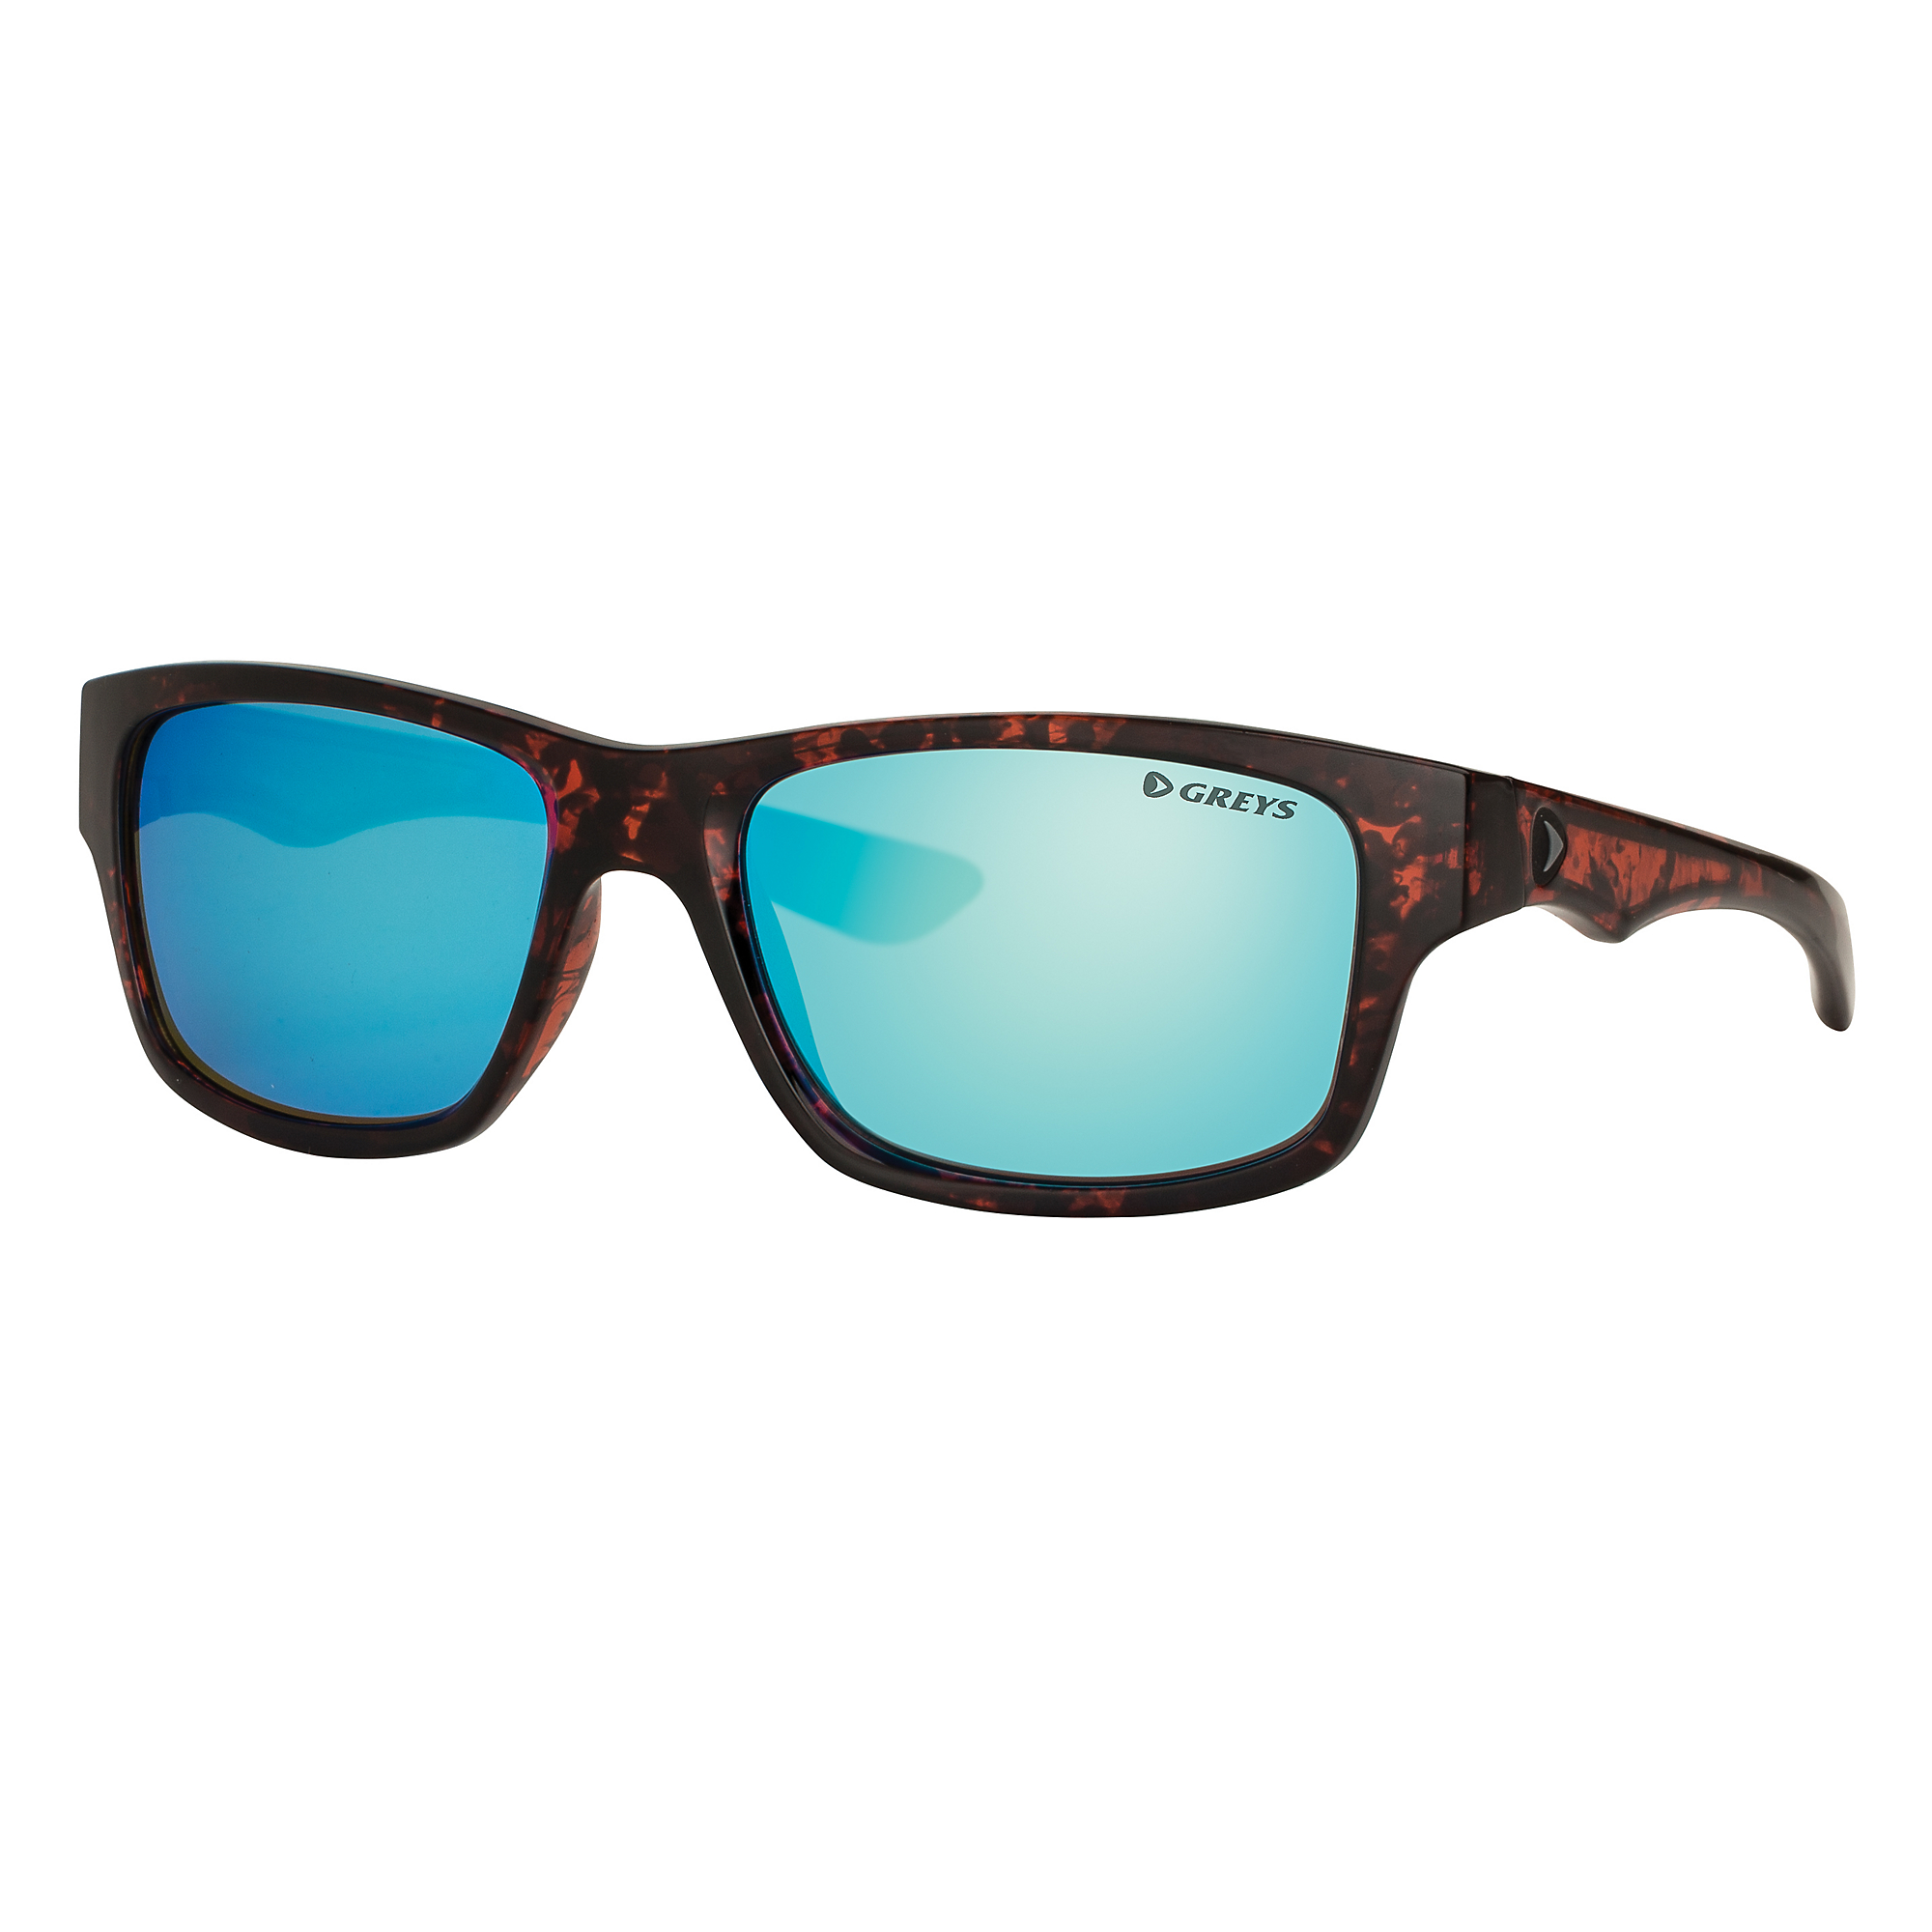 Greys G4 Sunglasses (Gloss Tortoise/Blue Mirrror) 1443840.jpg